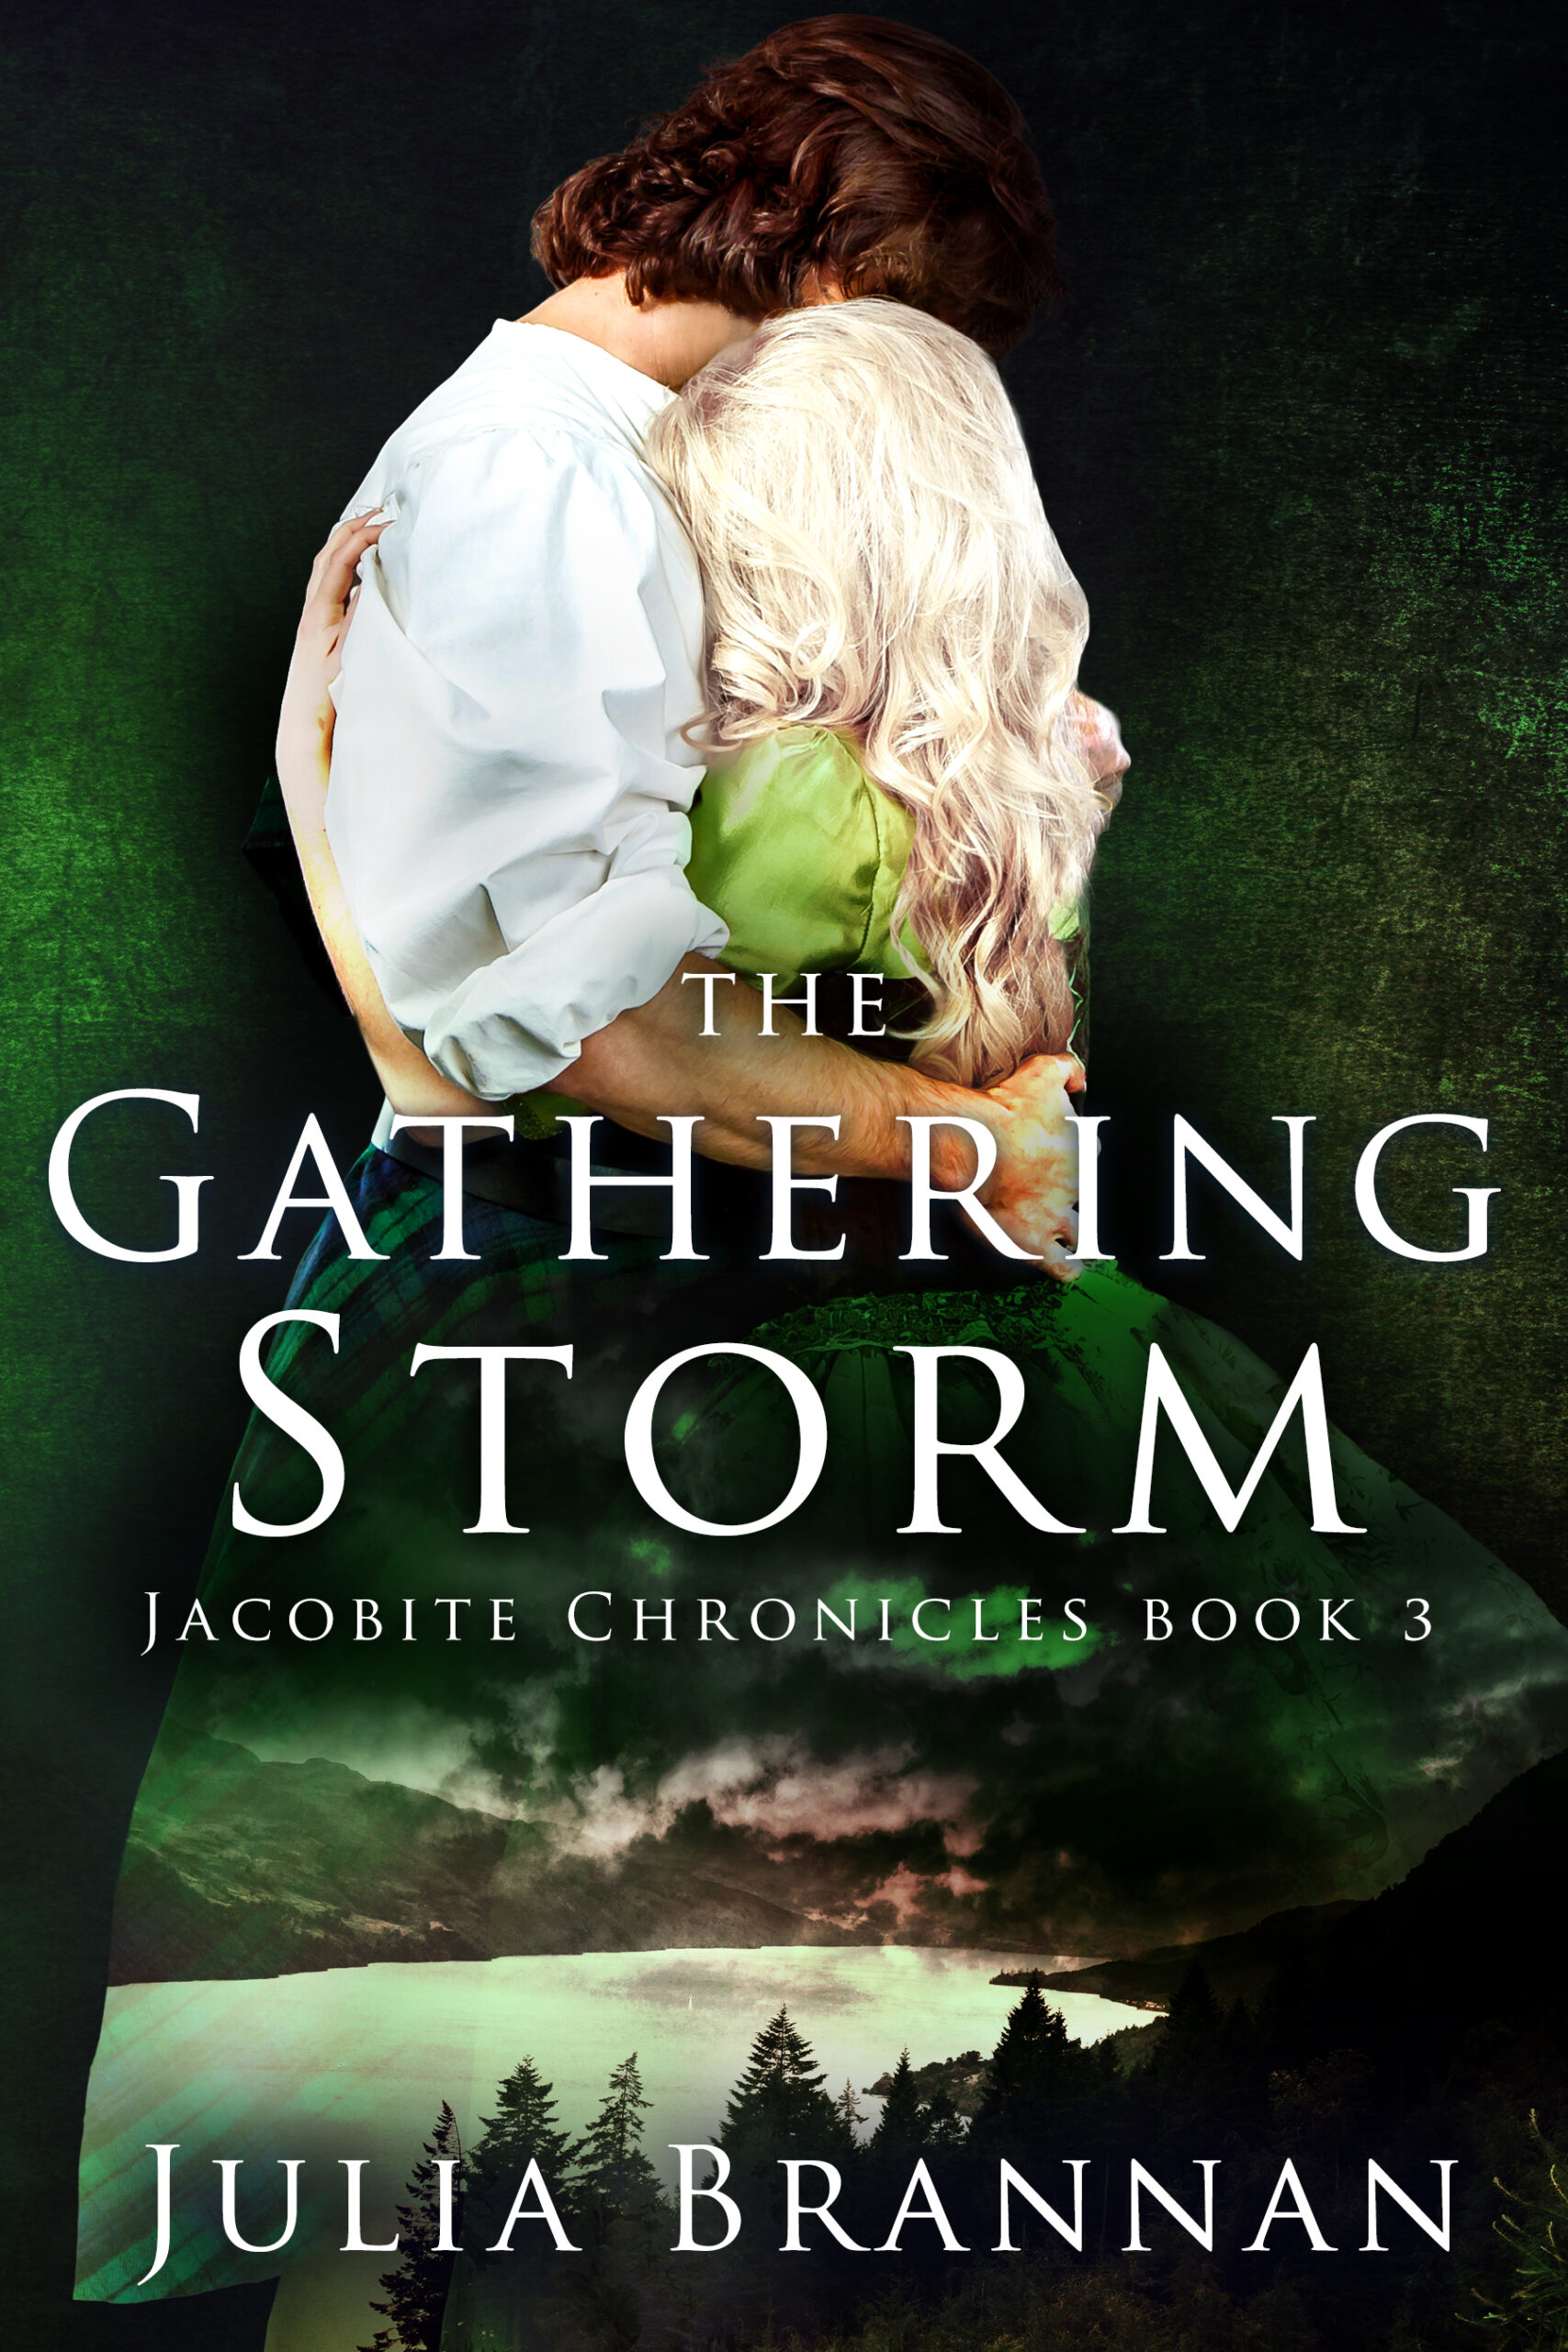 The Gathering Storm by Julia Brannan